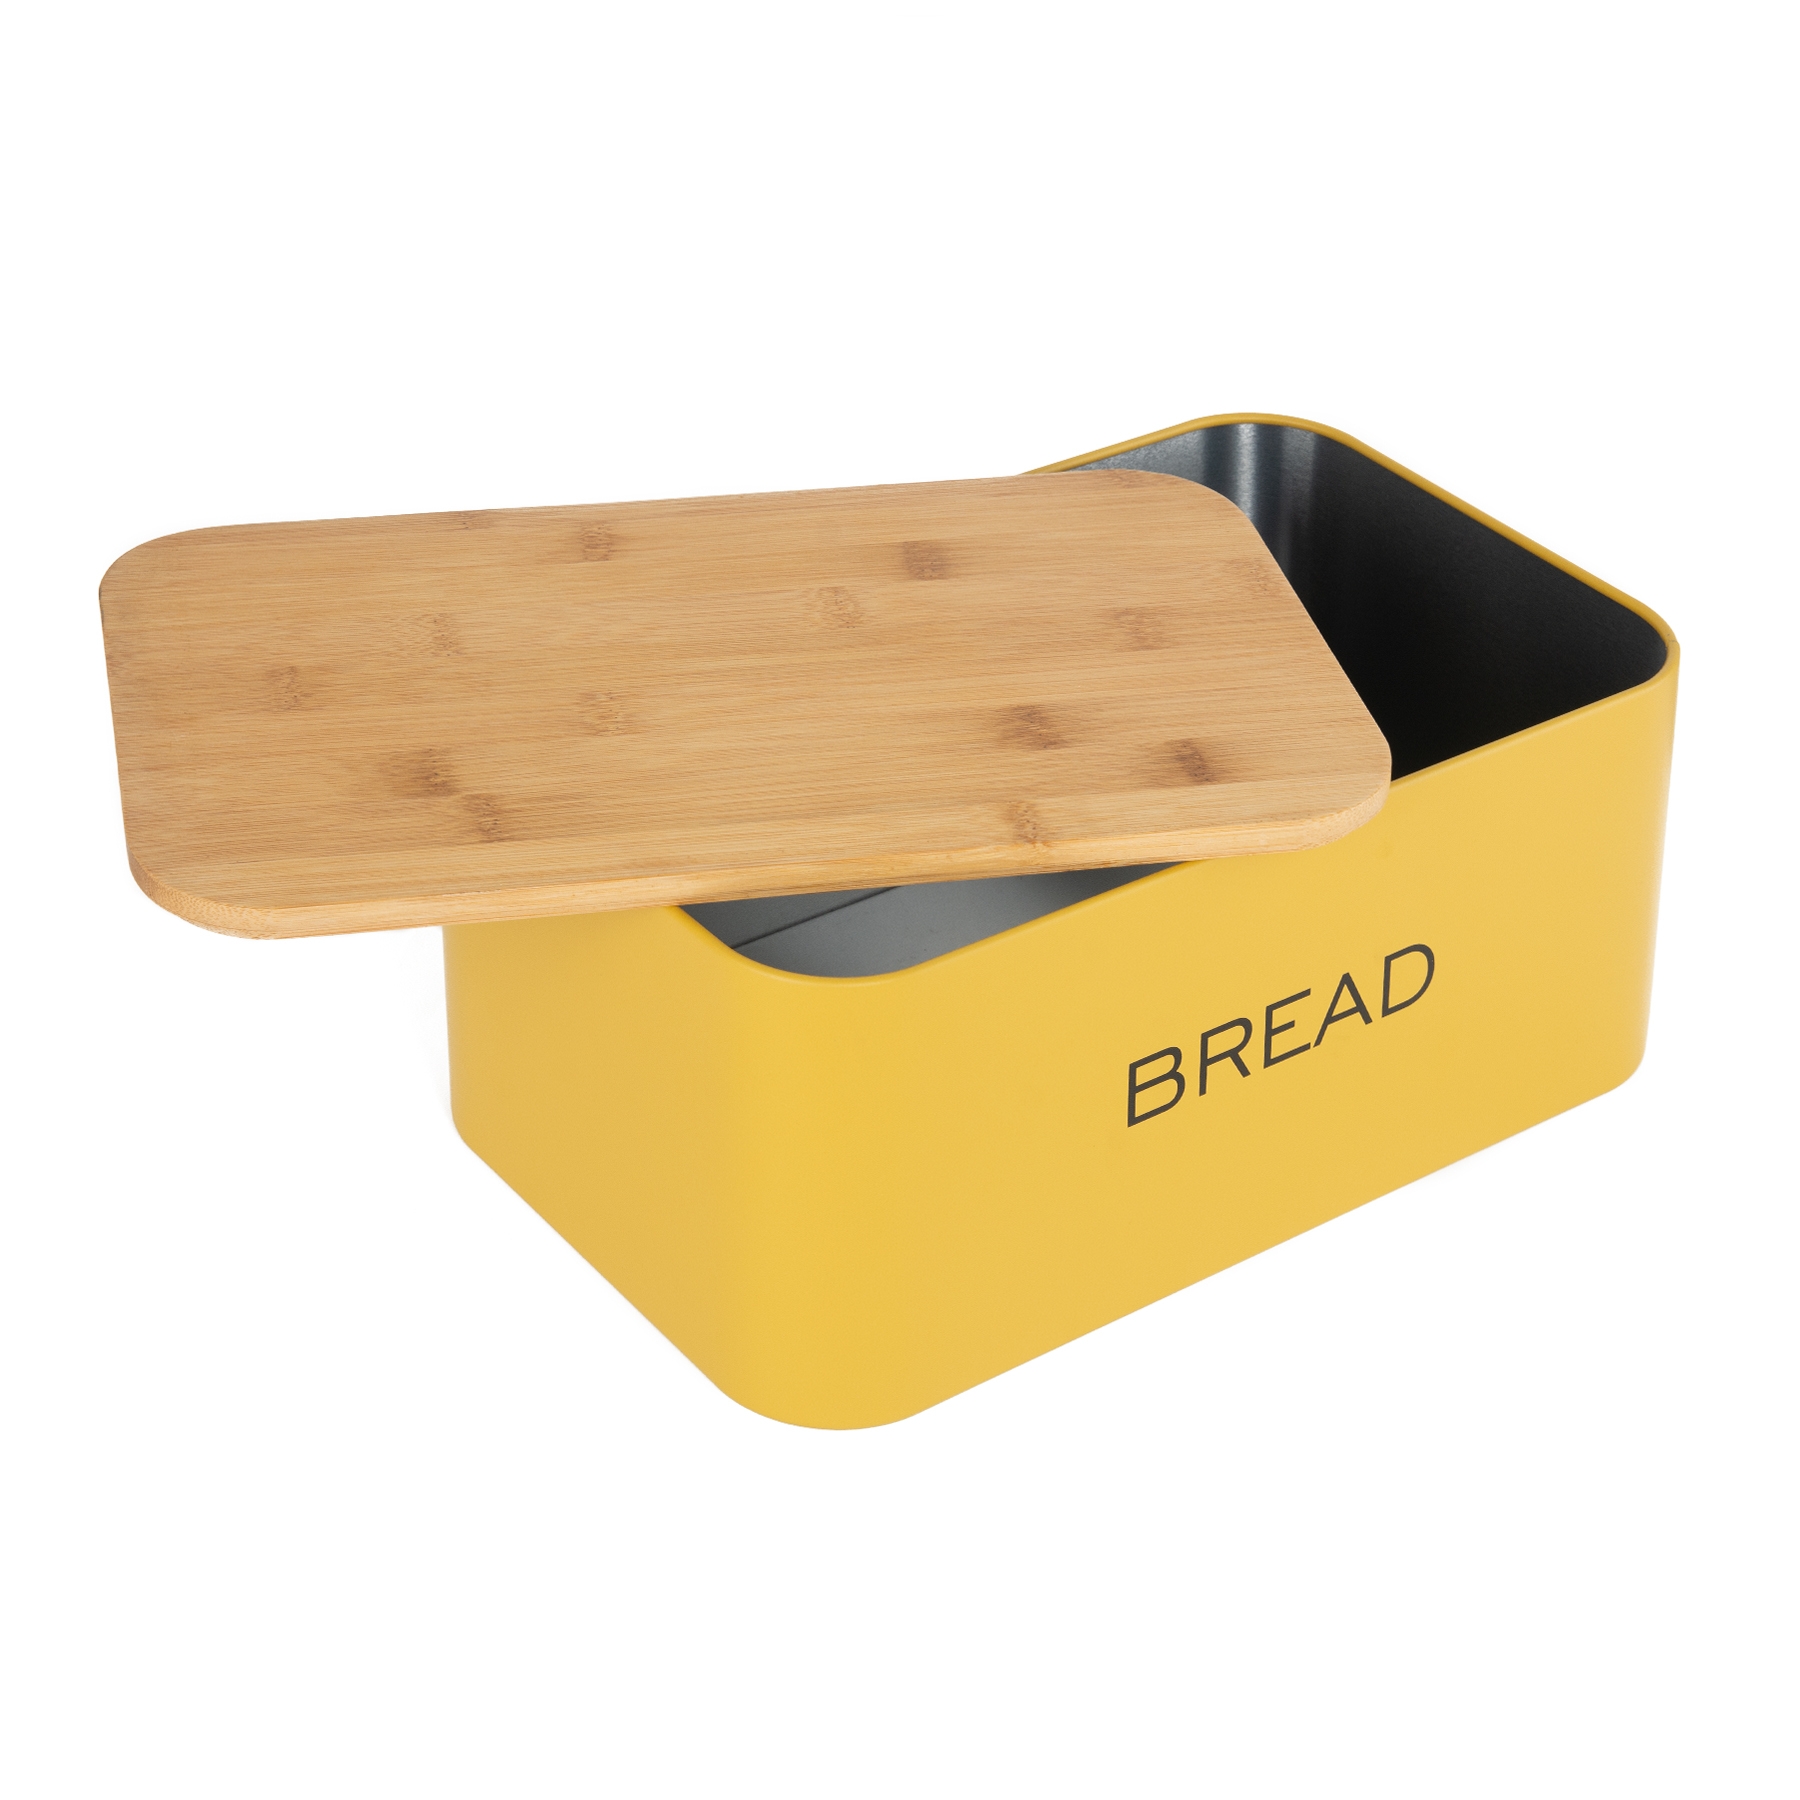 Kovový chlebník s bambusovým víkem BREAD mustard/hořčicová 30x18 cm Homla